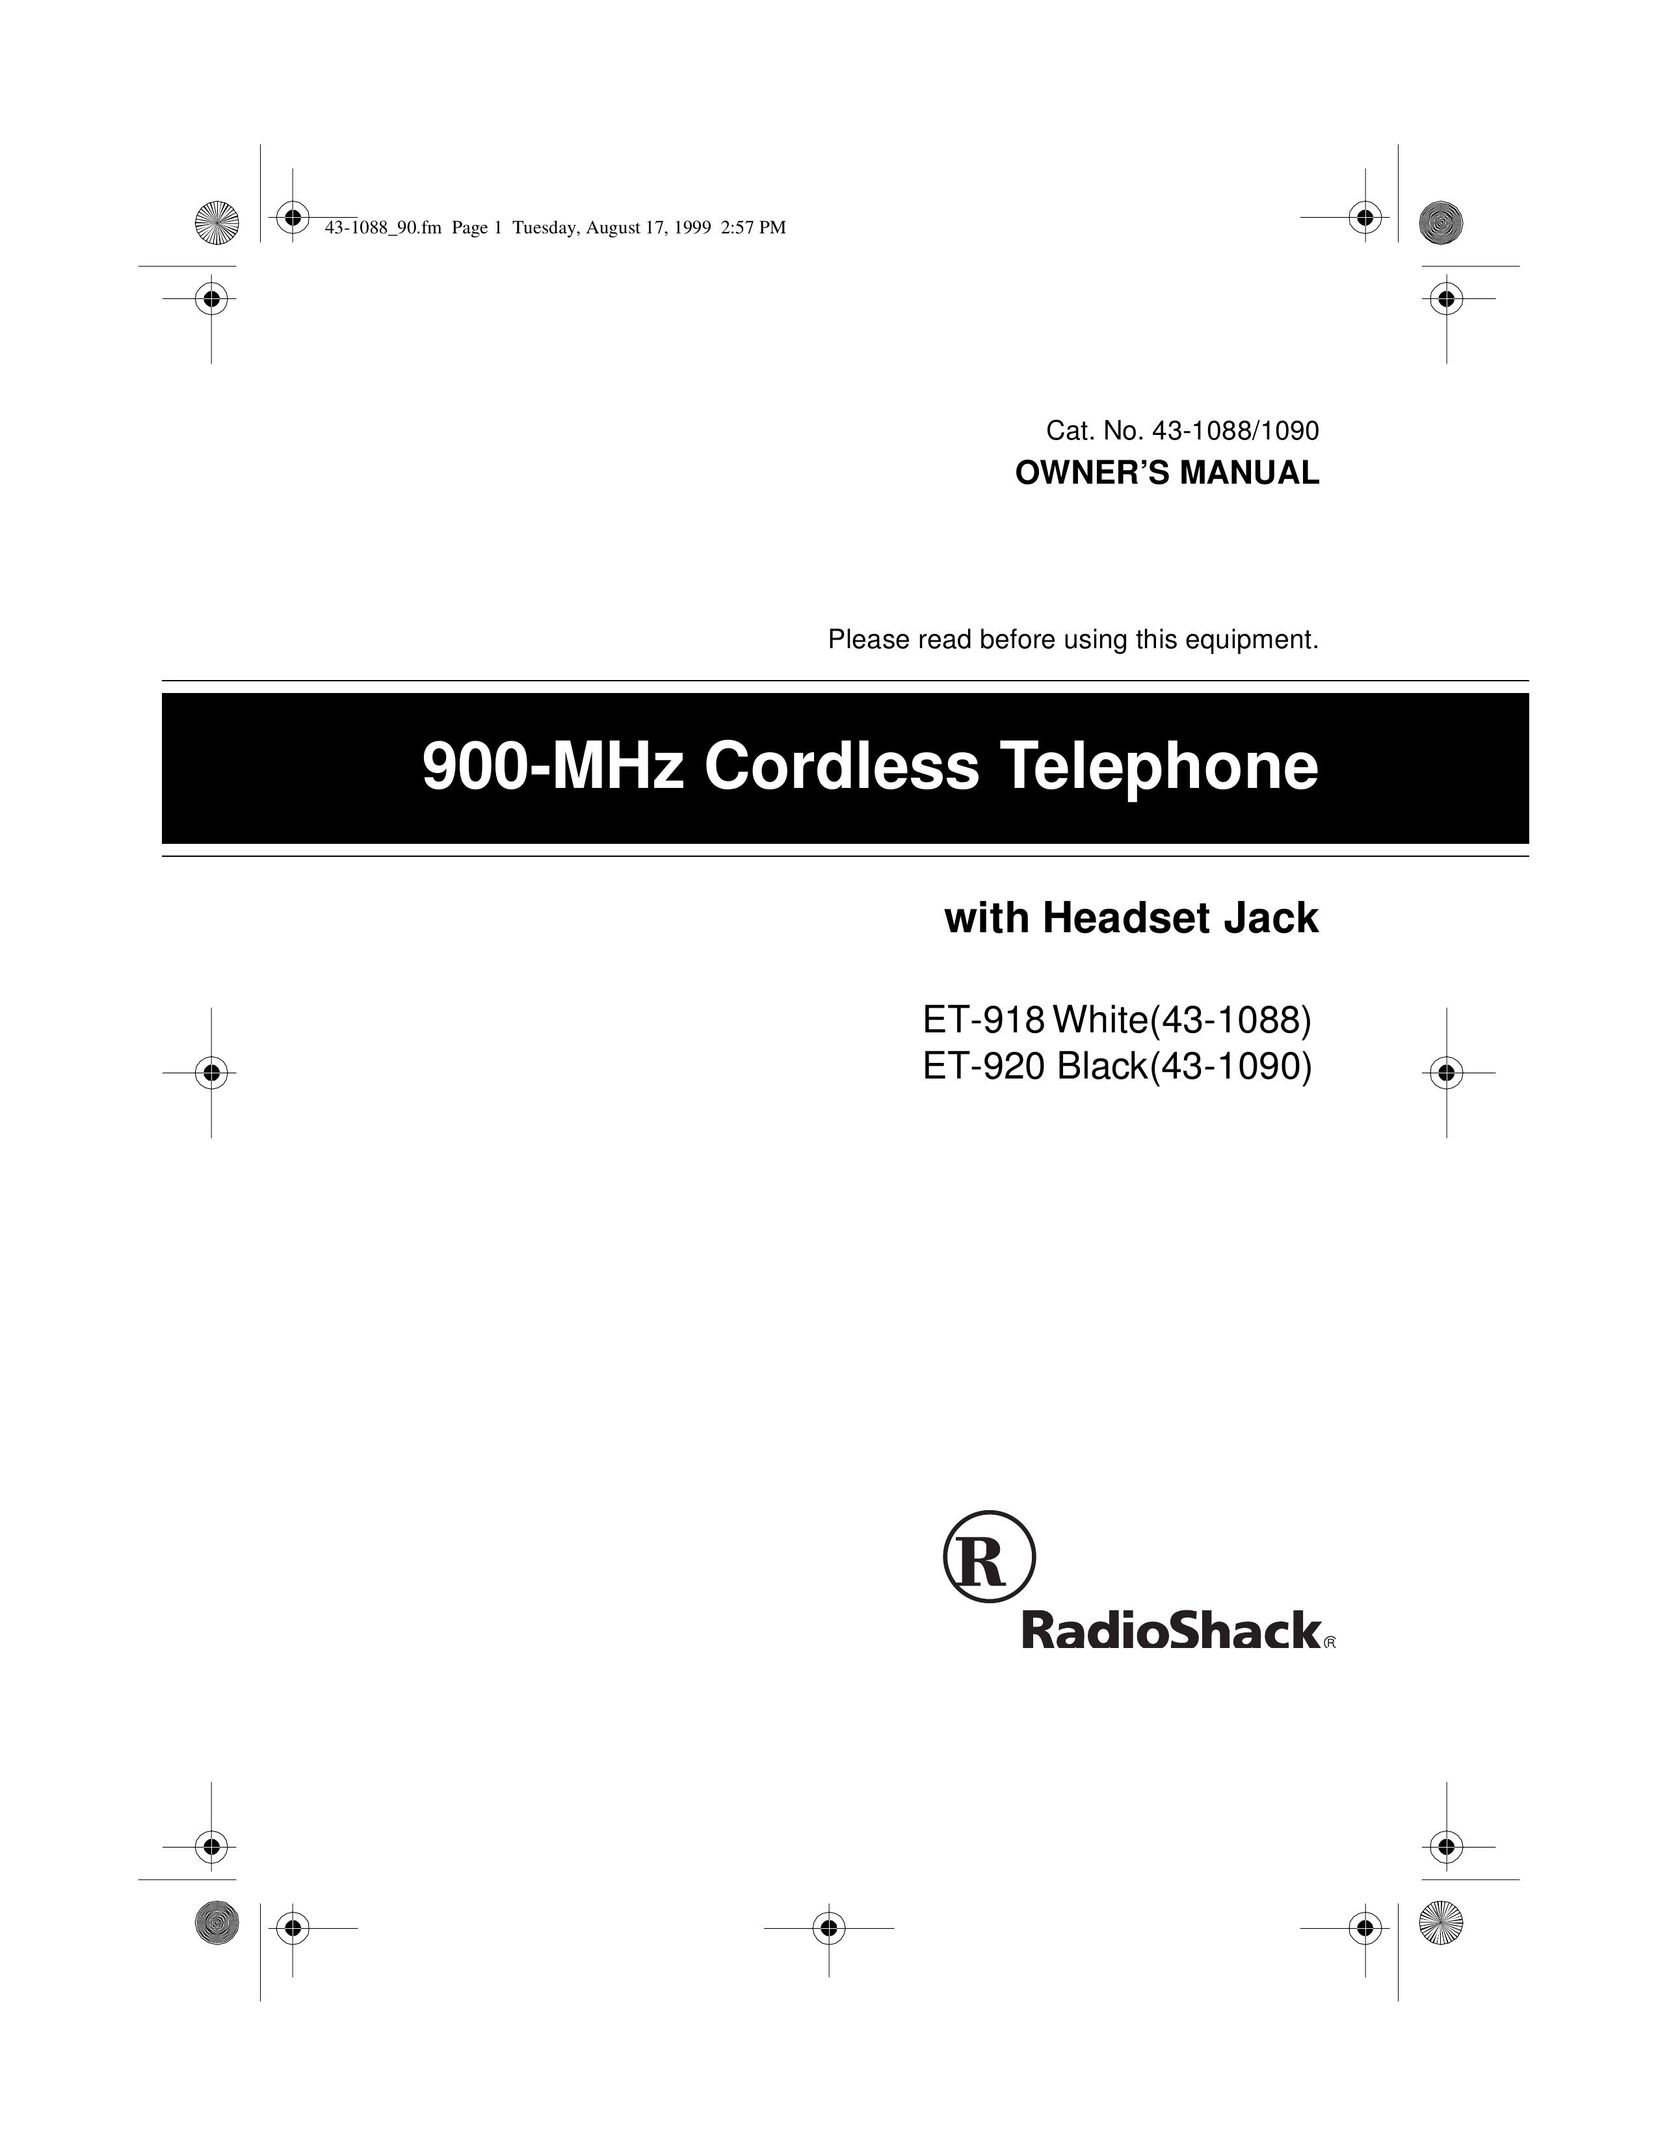 Radio Shack 43-1088 Cordless Telephone User Manual